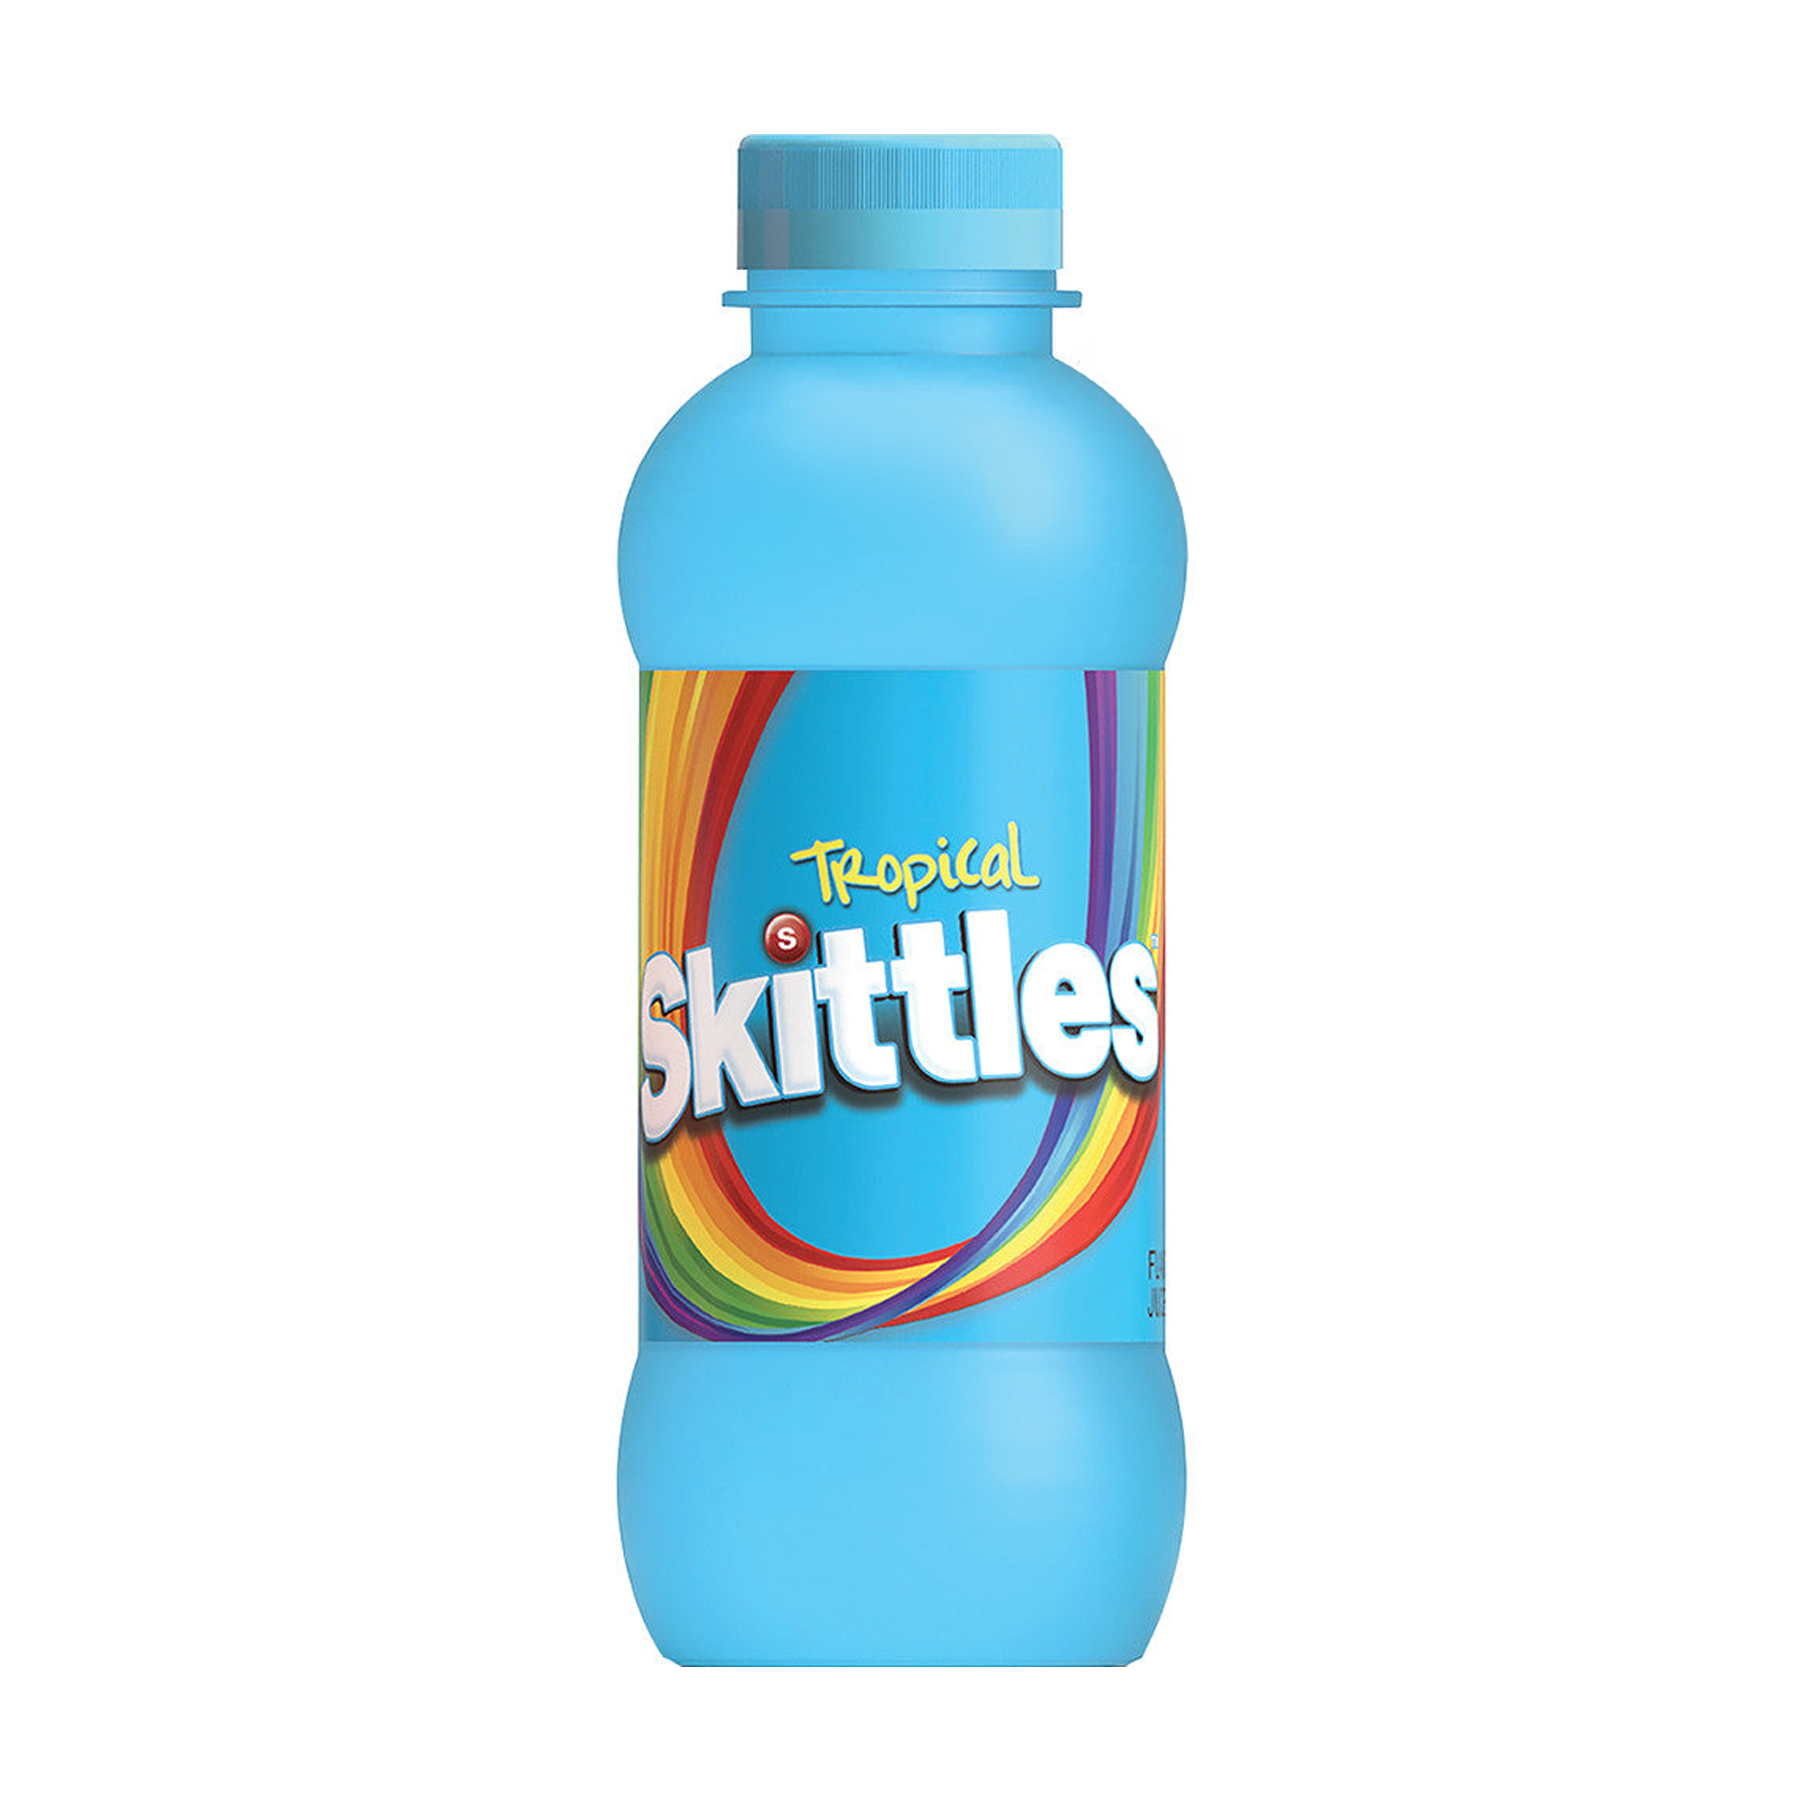 Skittles Tropical Drink (14 Oz)